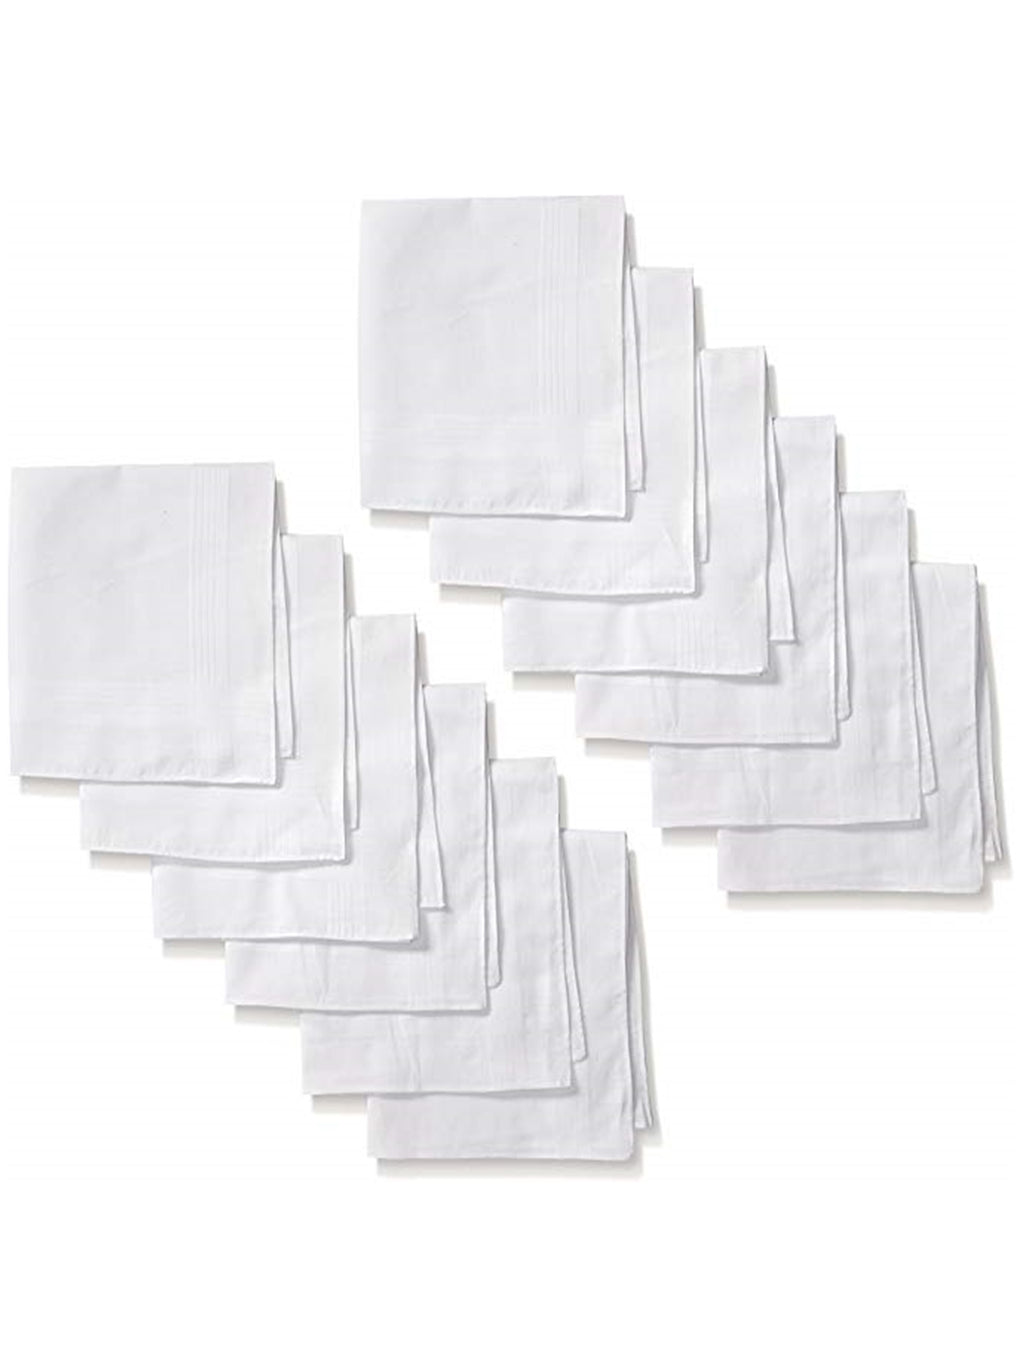 Men's White 100% Cotton Soft Finish Handkerchiefs Prefolded Pocket Squares HAVE-A-HANK 12 Pieces - White Regular 